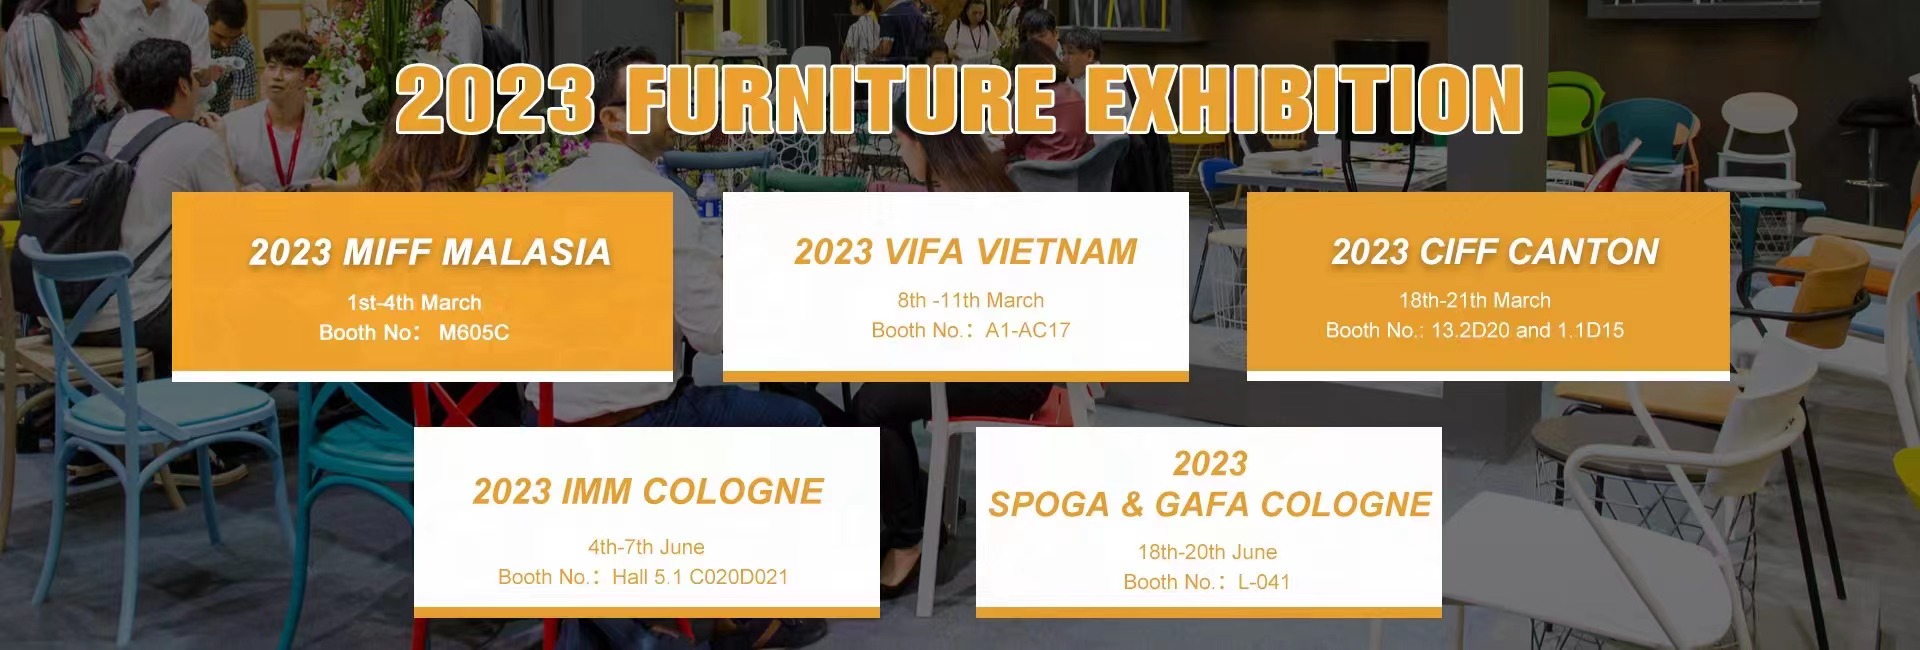 2023 furniture Exhibition